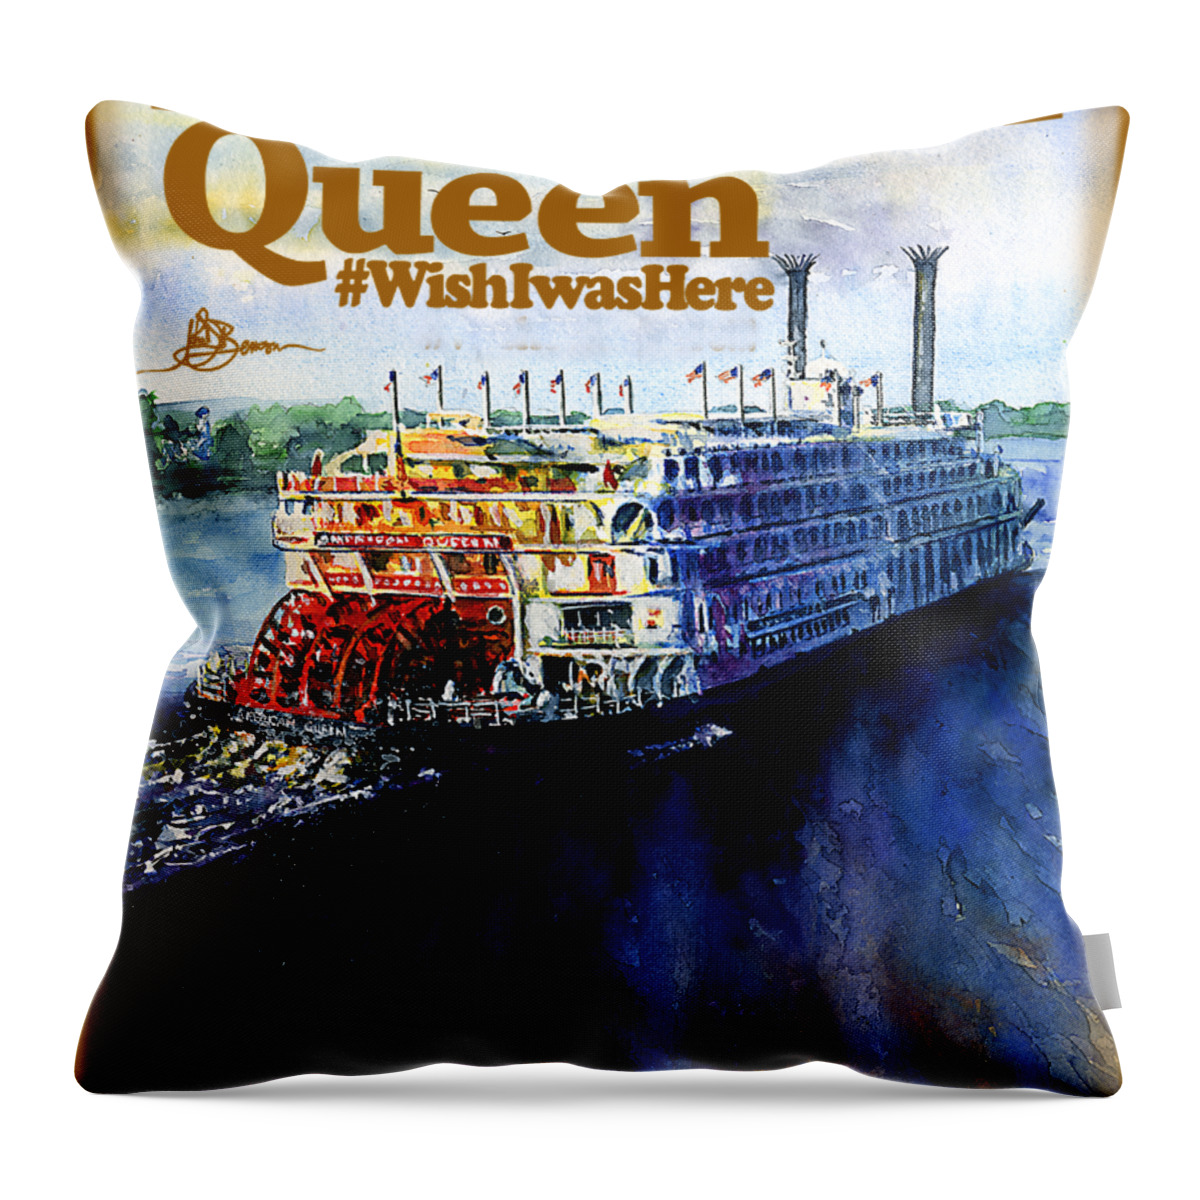 American Queen Throw Pillow featuring the painting American Queen Shirt by John D Benson